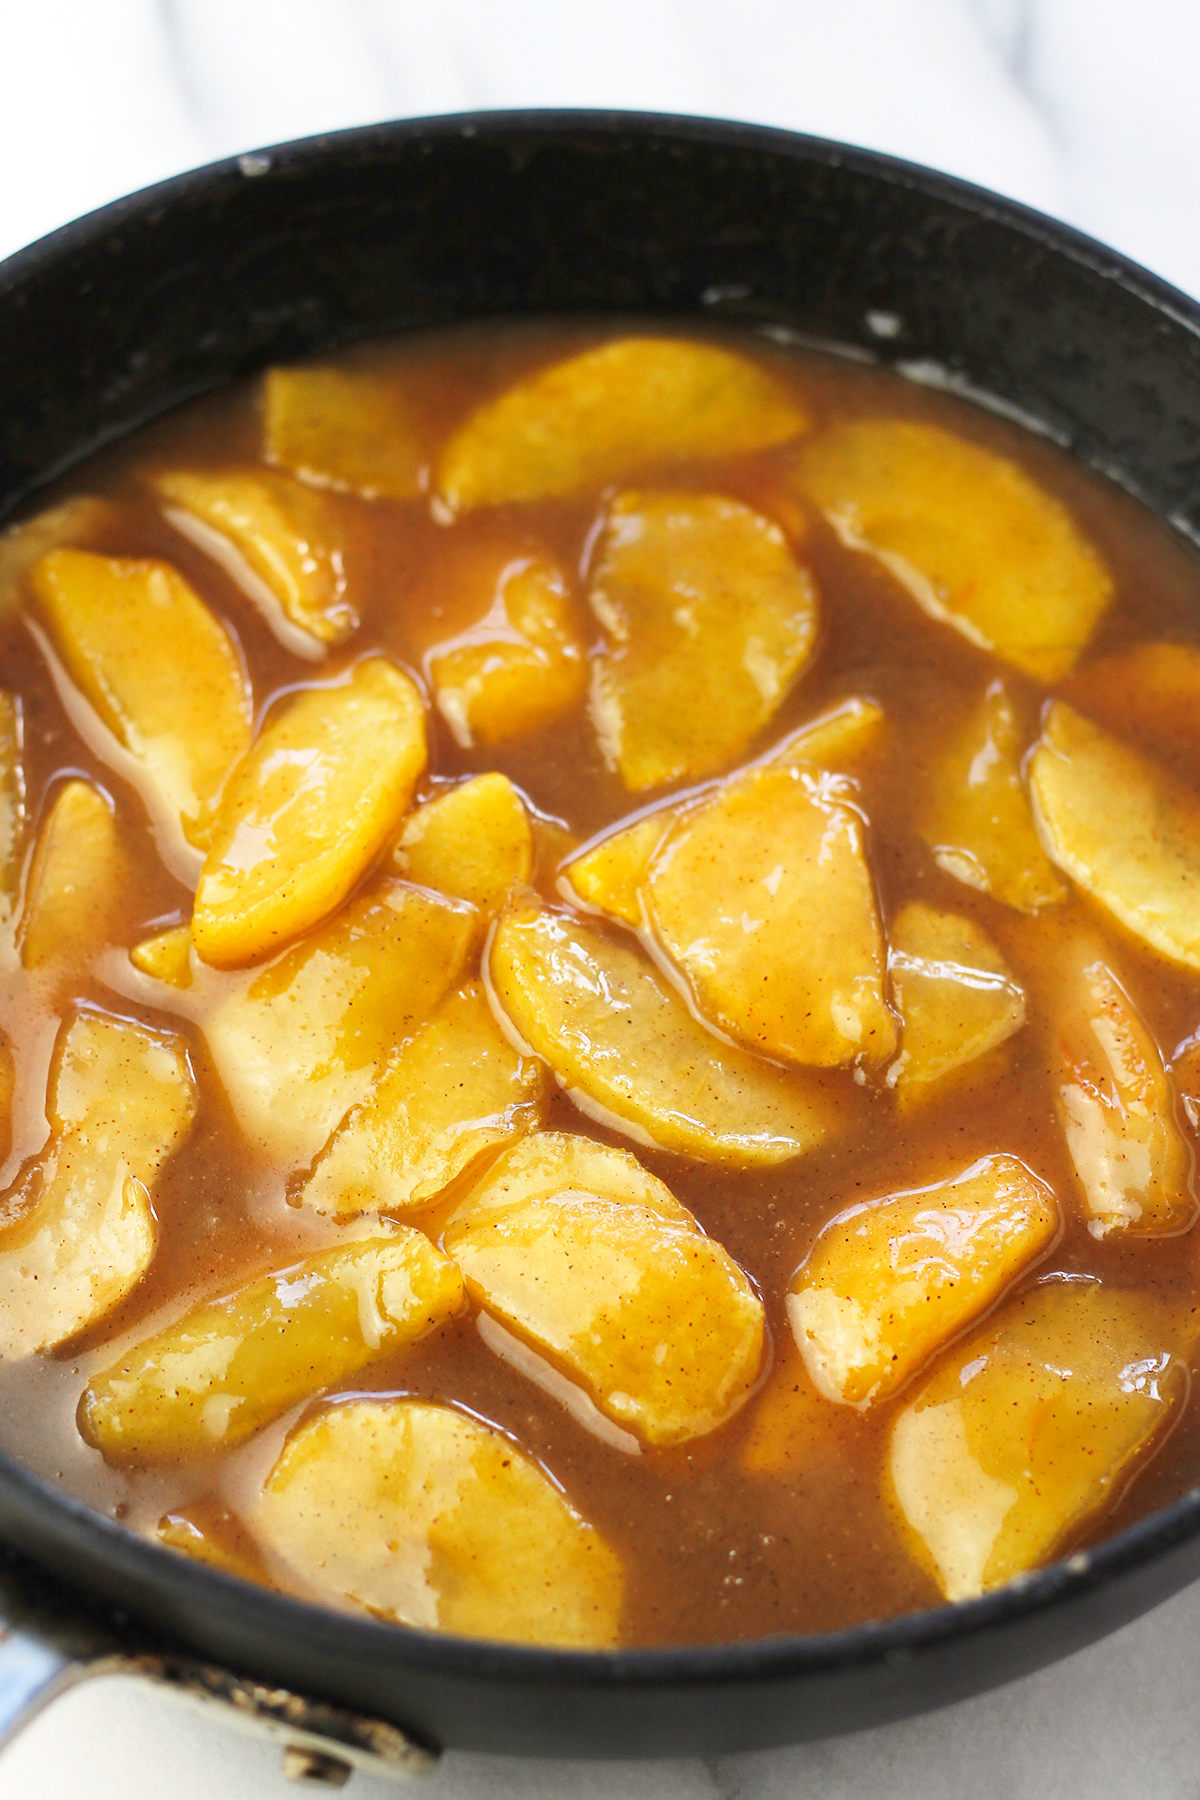 Pan of cooked sliced apples in pumpkin caramel sauce.